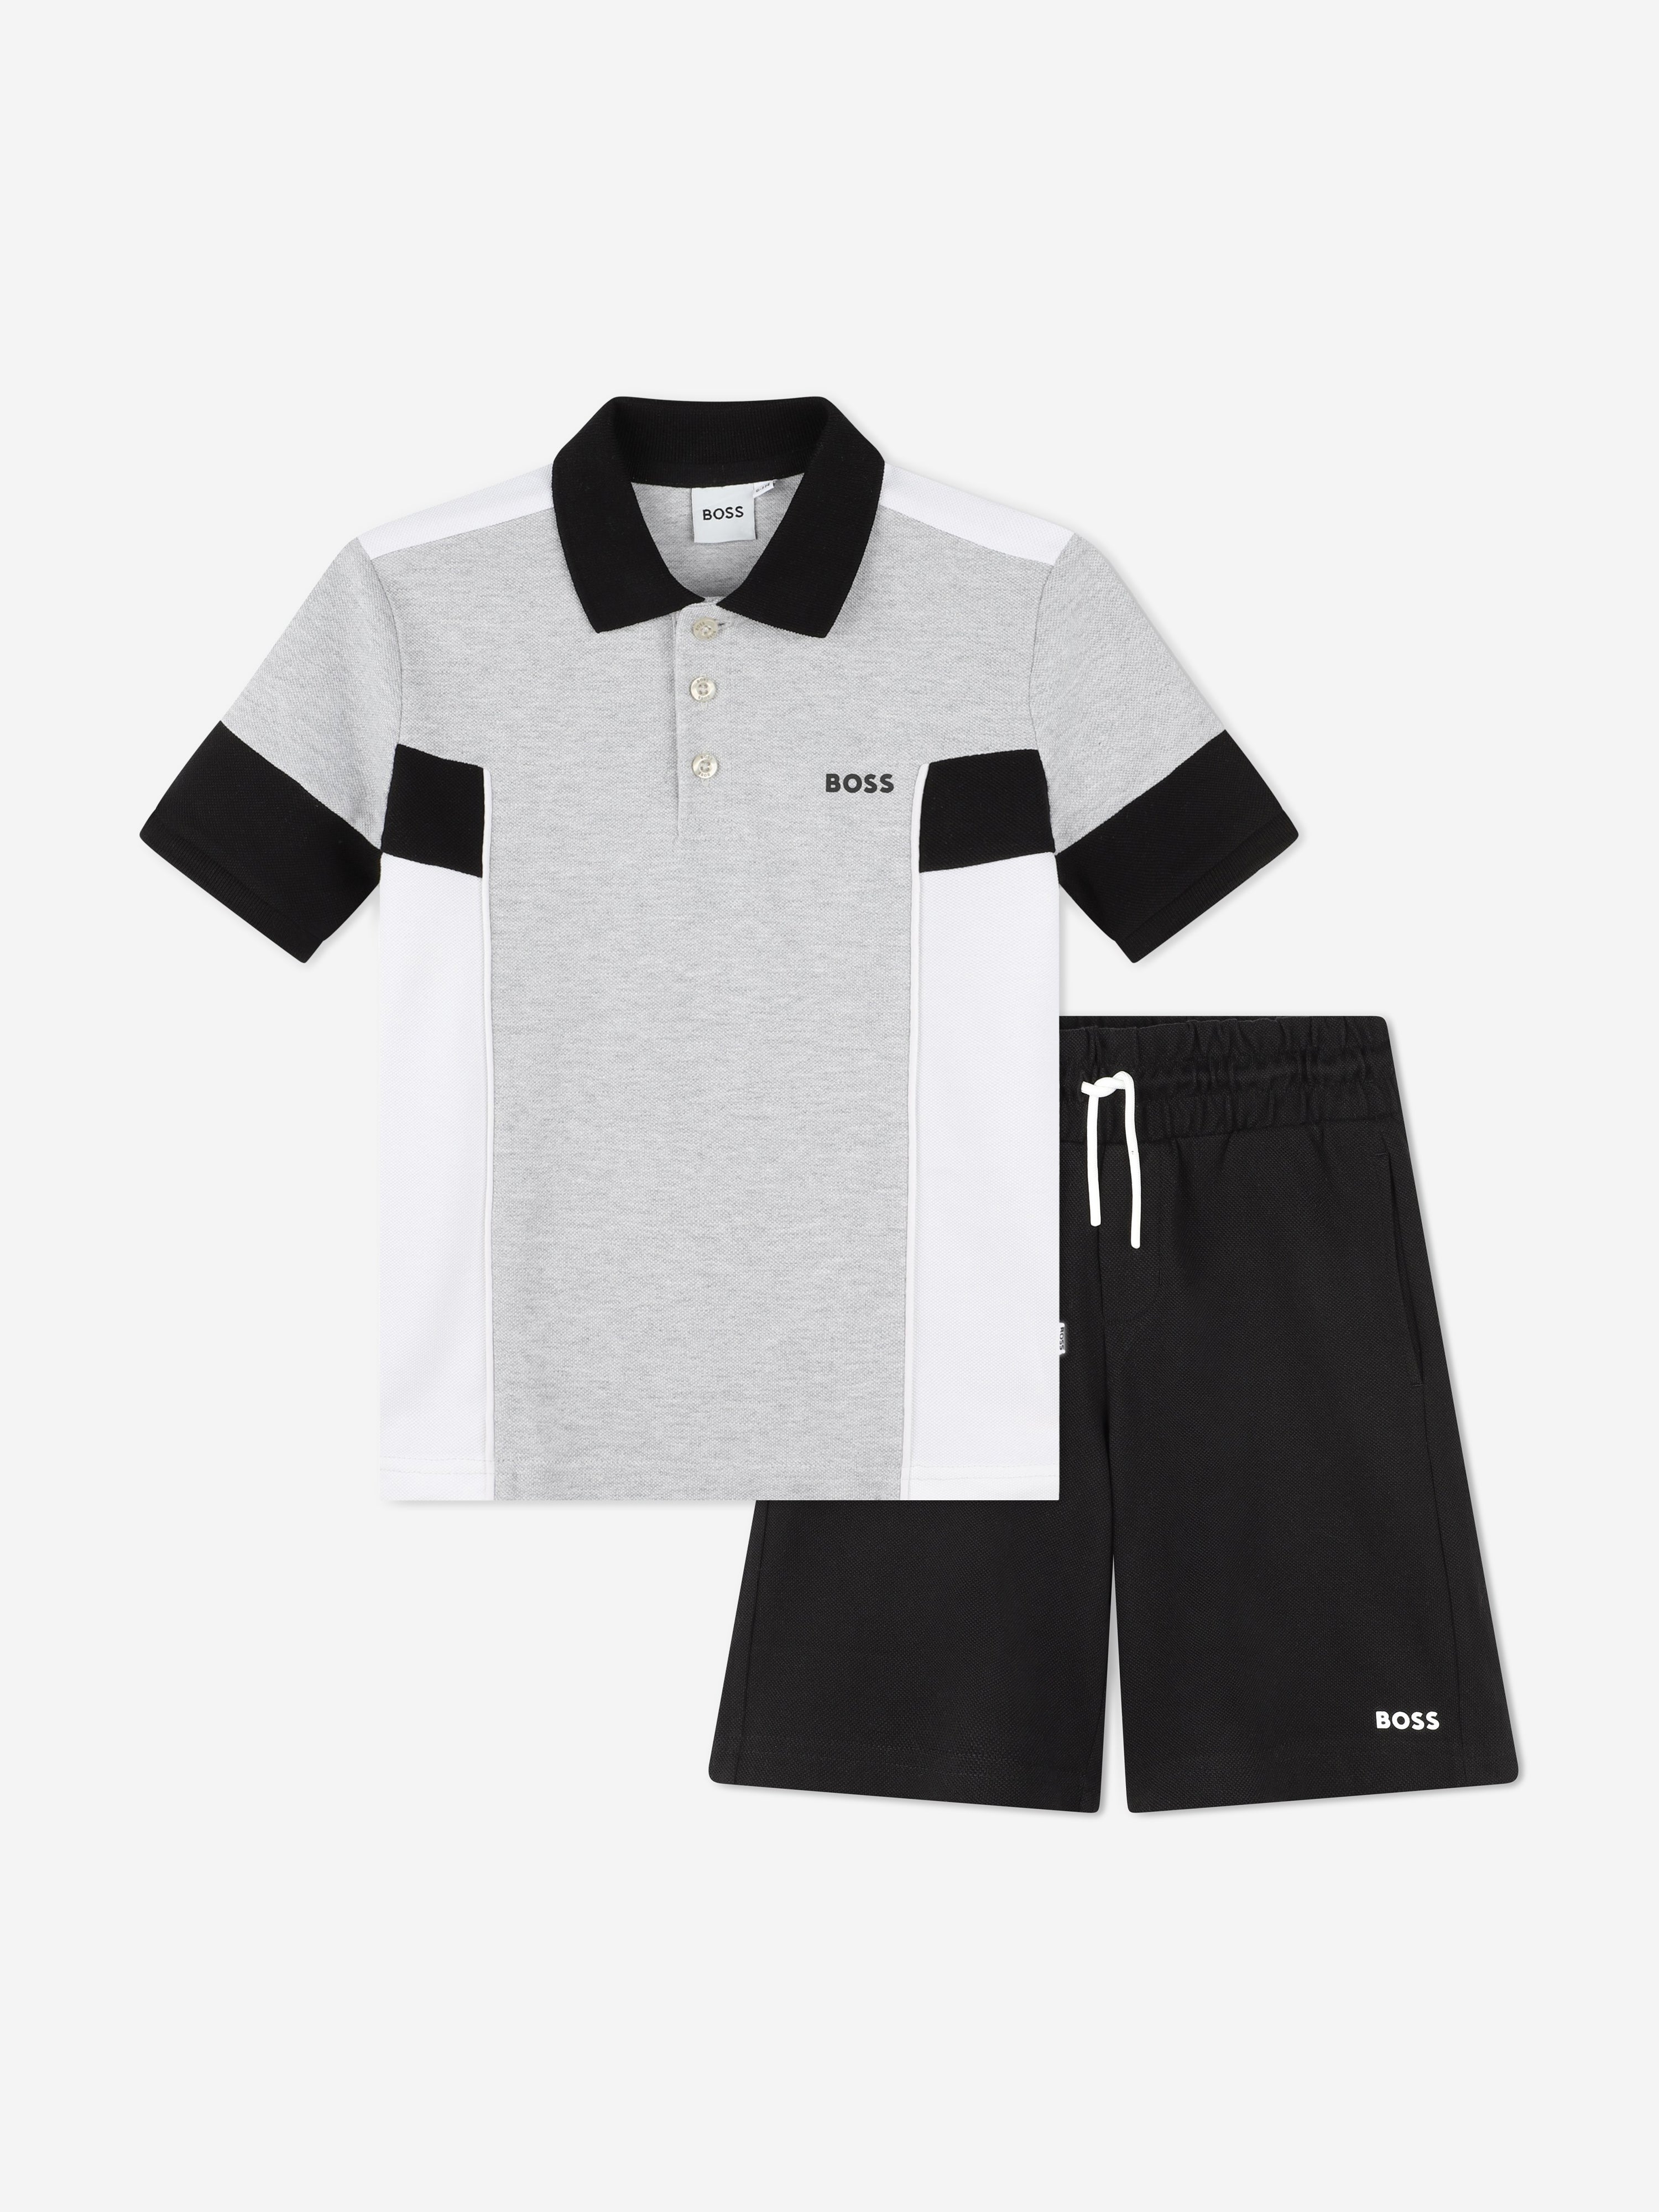 Hugo Boss Babies' Boys Polo Shirt And Shorts Set In Multi